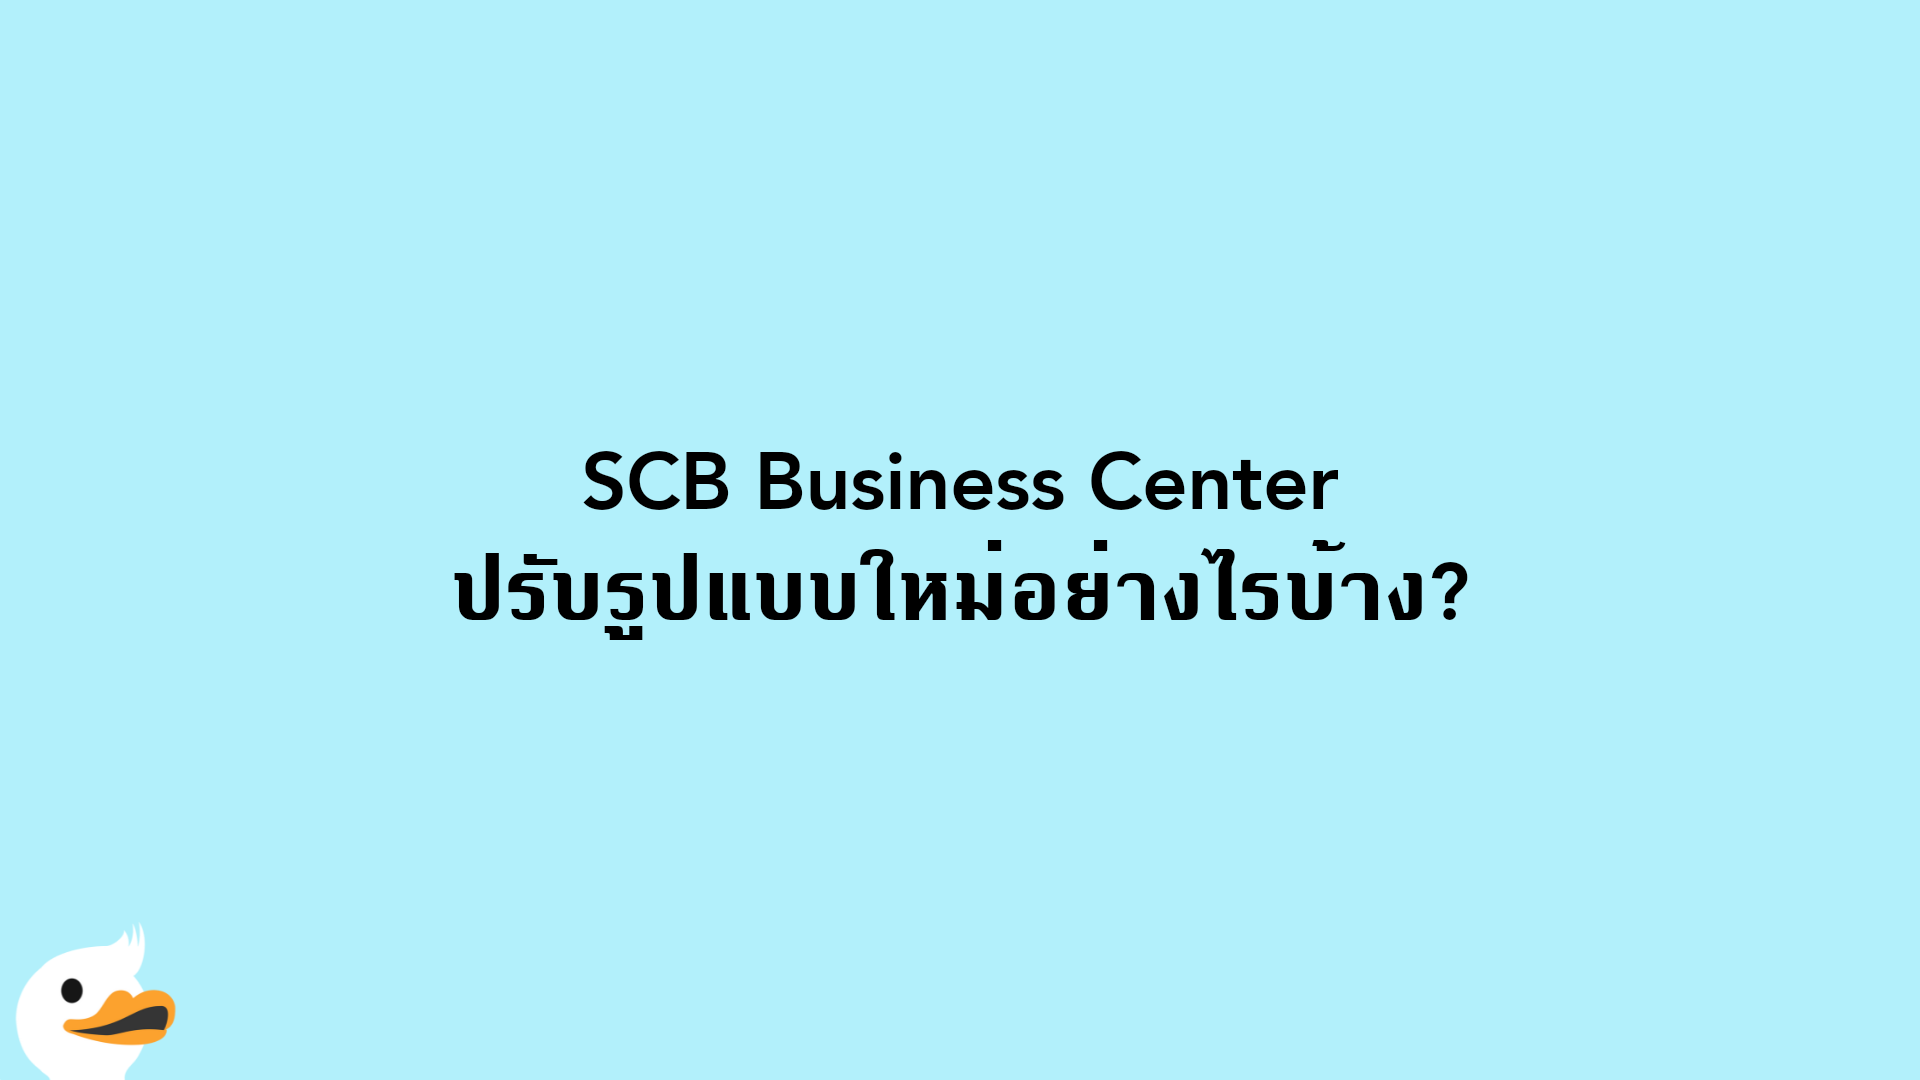 SCB Business Center ปรับรูปแบบใหม่อย่างไรบ้าง?